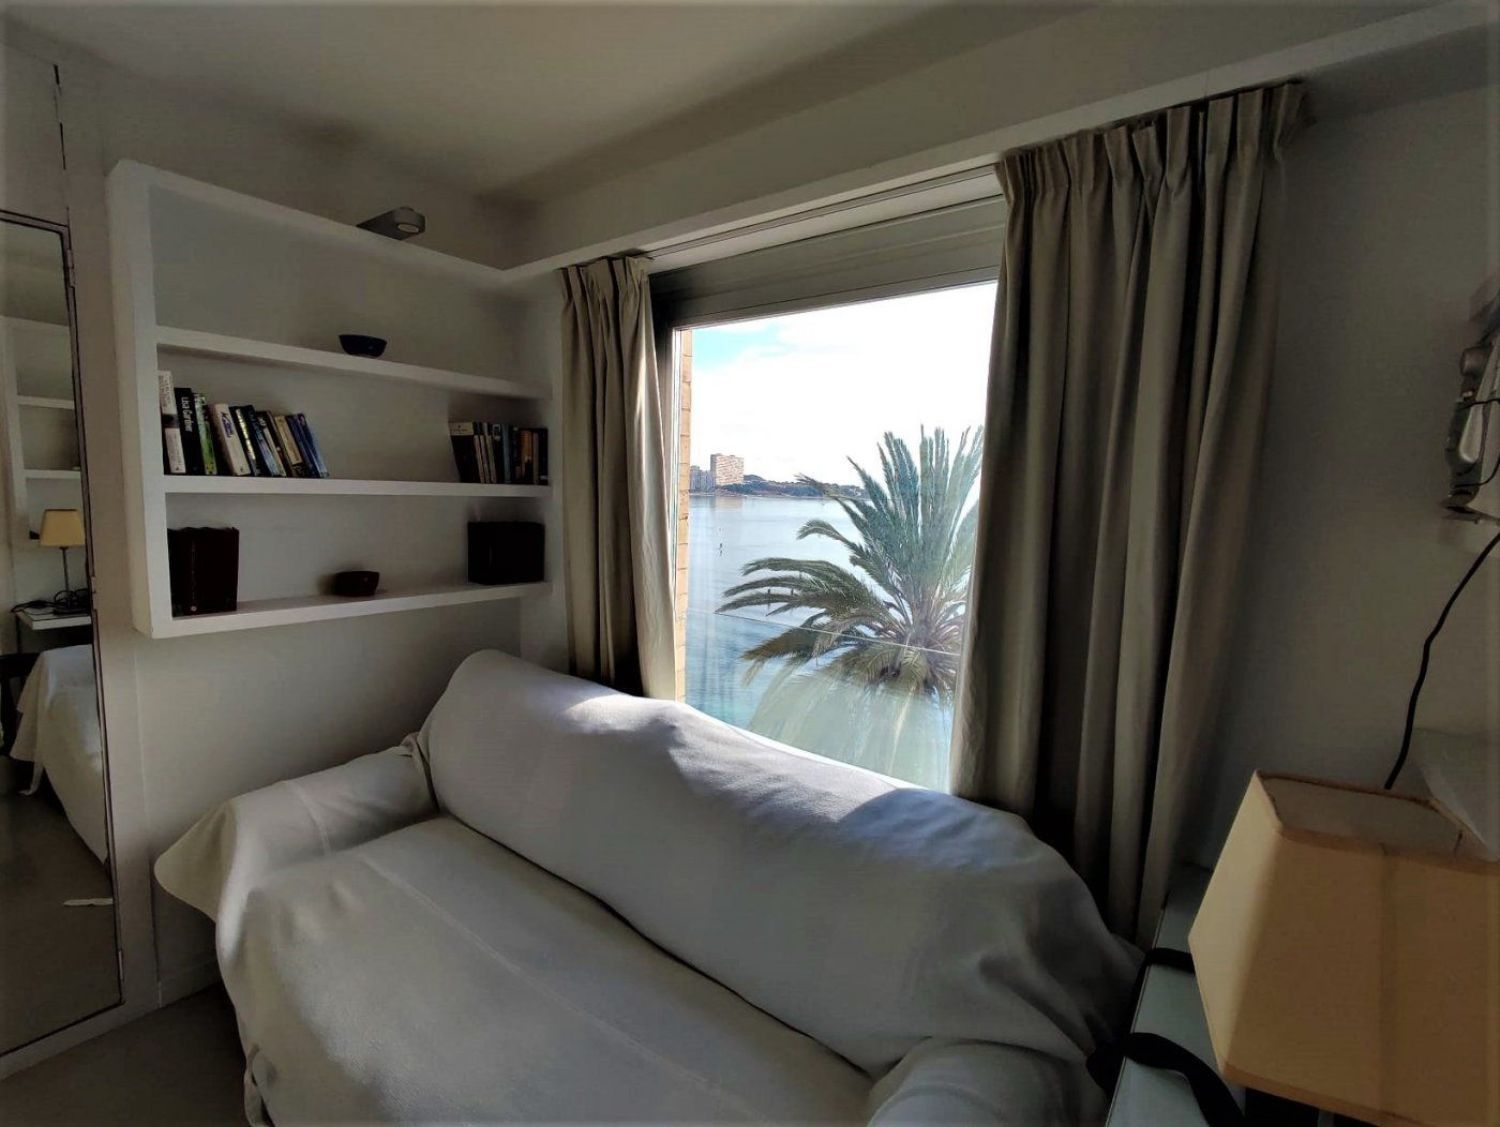 Apartment for sale on the seafront in l'Albufeta, in Alicante